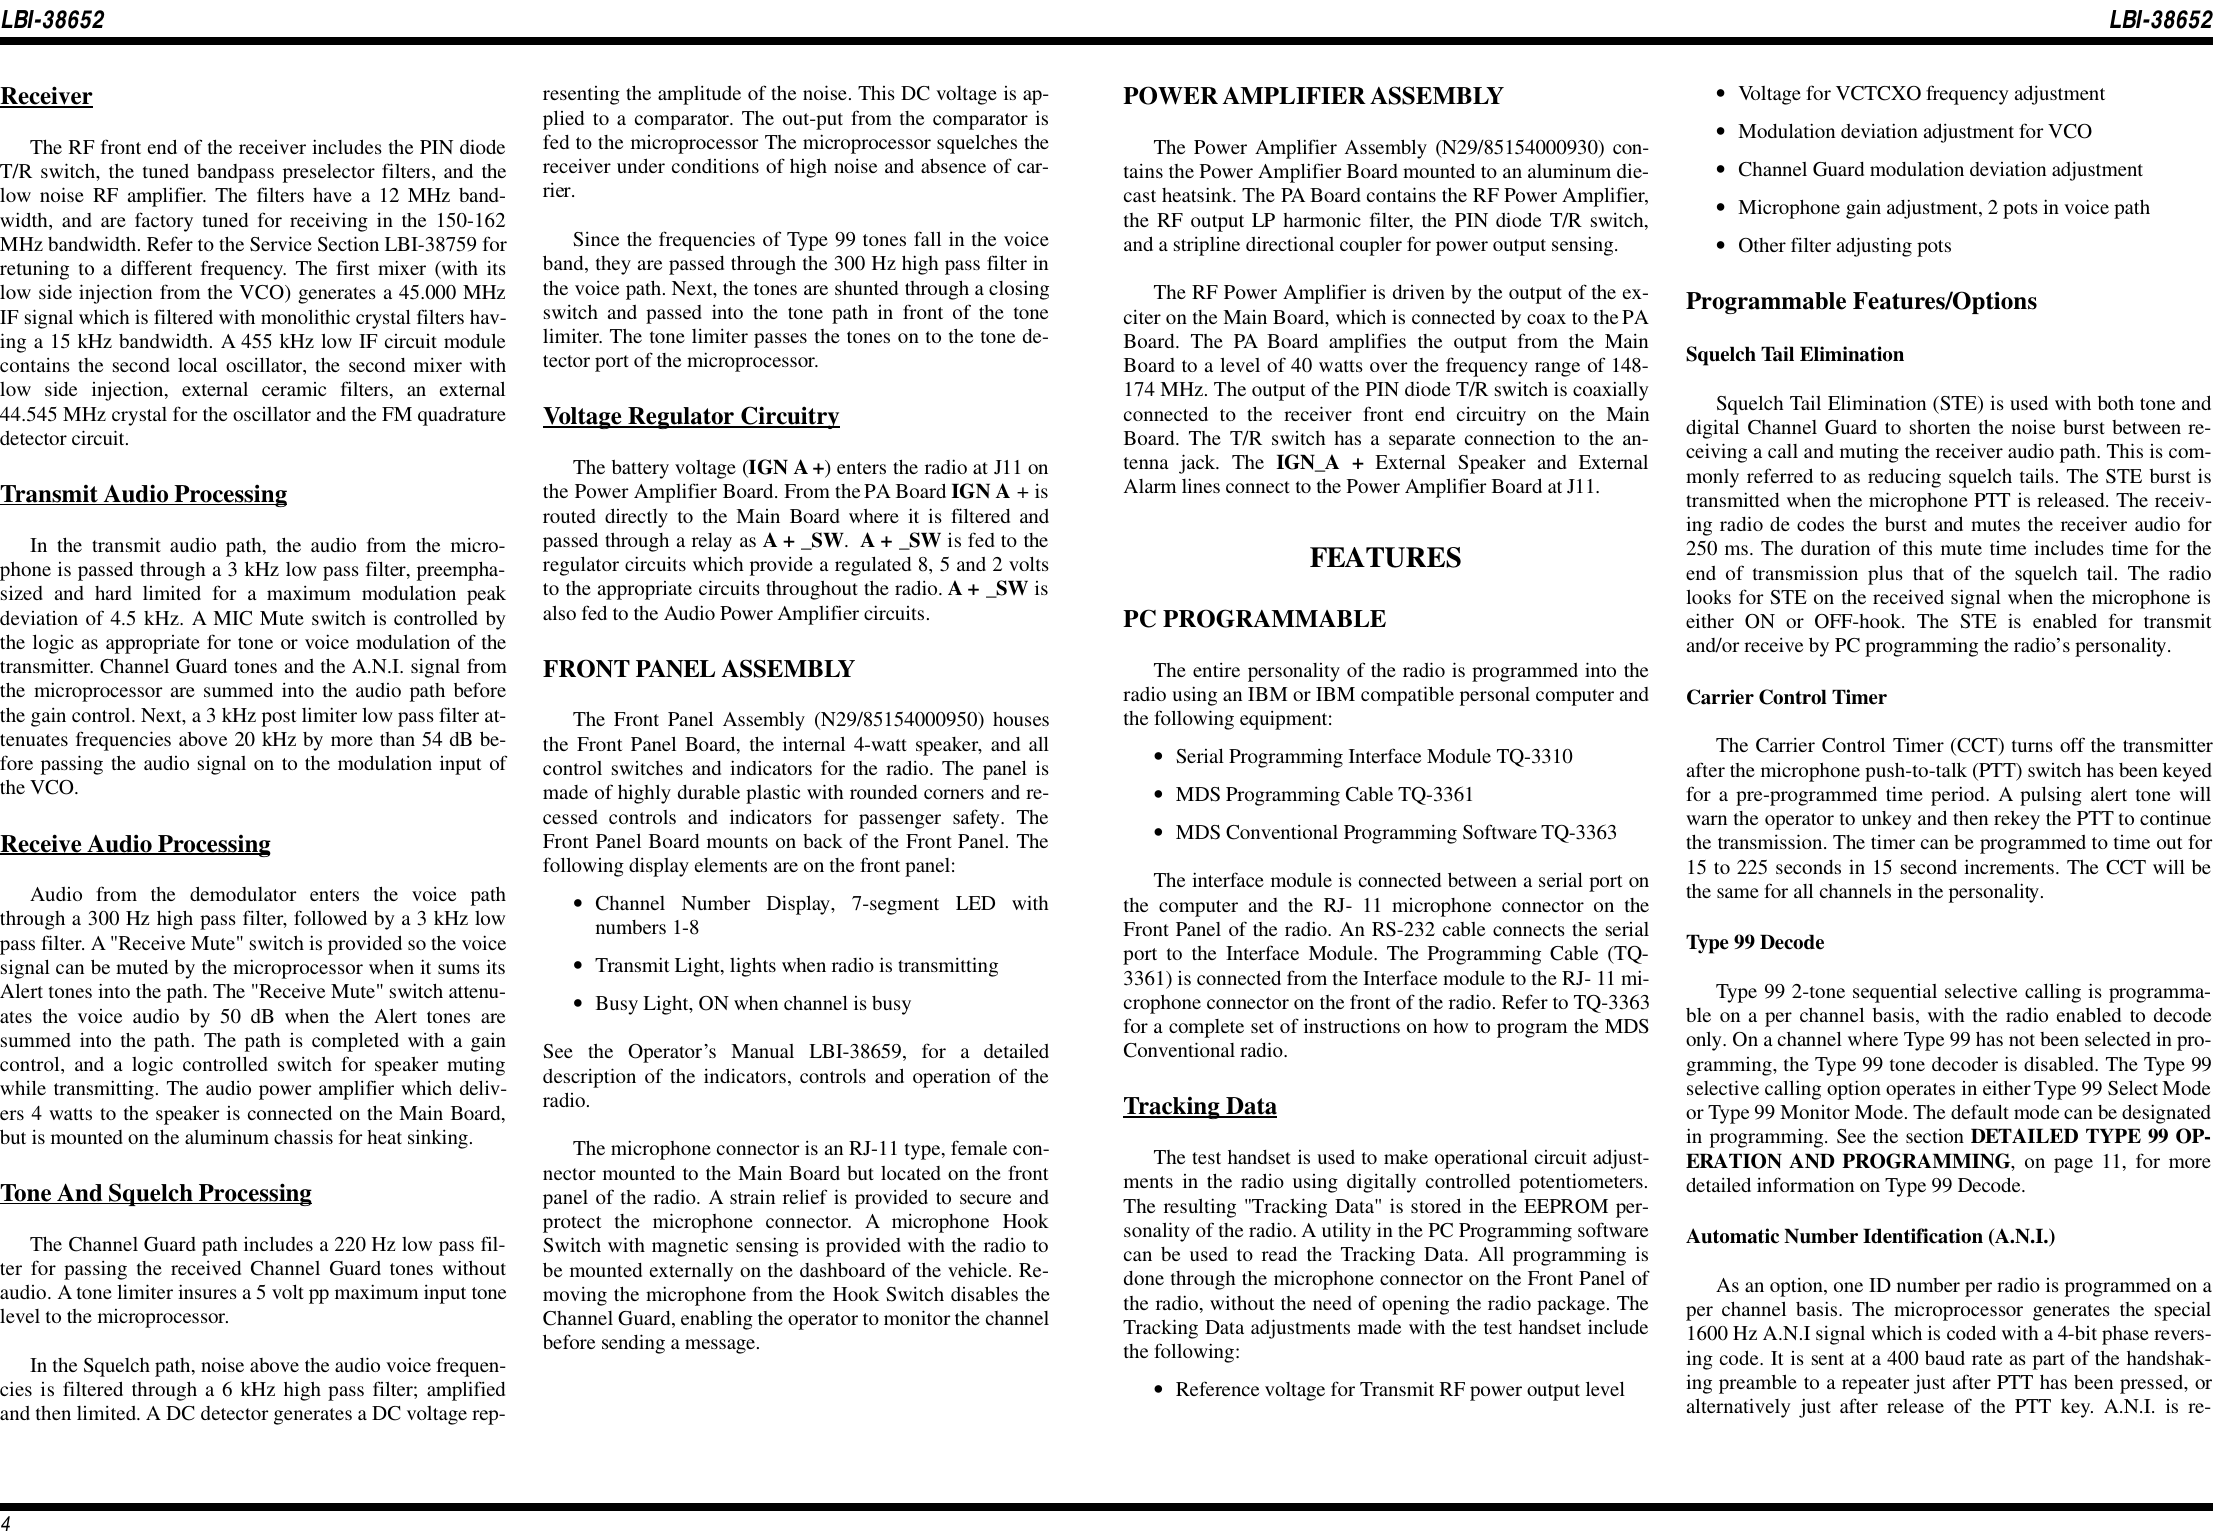 Page 5 of 10 - Ericsson Ericsson-Lbi-38756-Users-Manual- LBI-38652 - MDS 148-174 MHz MOBILE RADIO COMBINATION  Ericsson-lbi-38756-users-manual